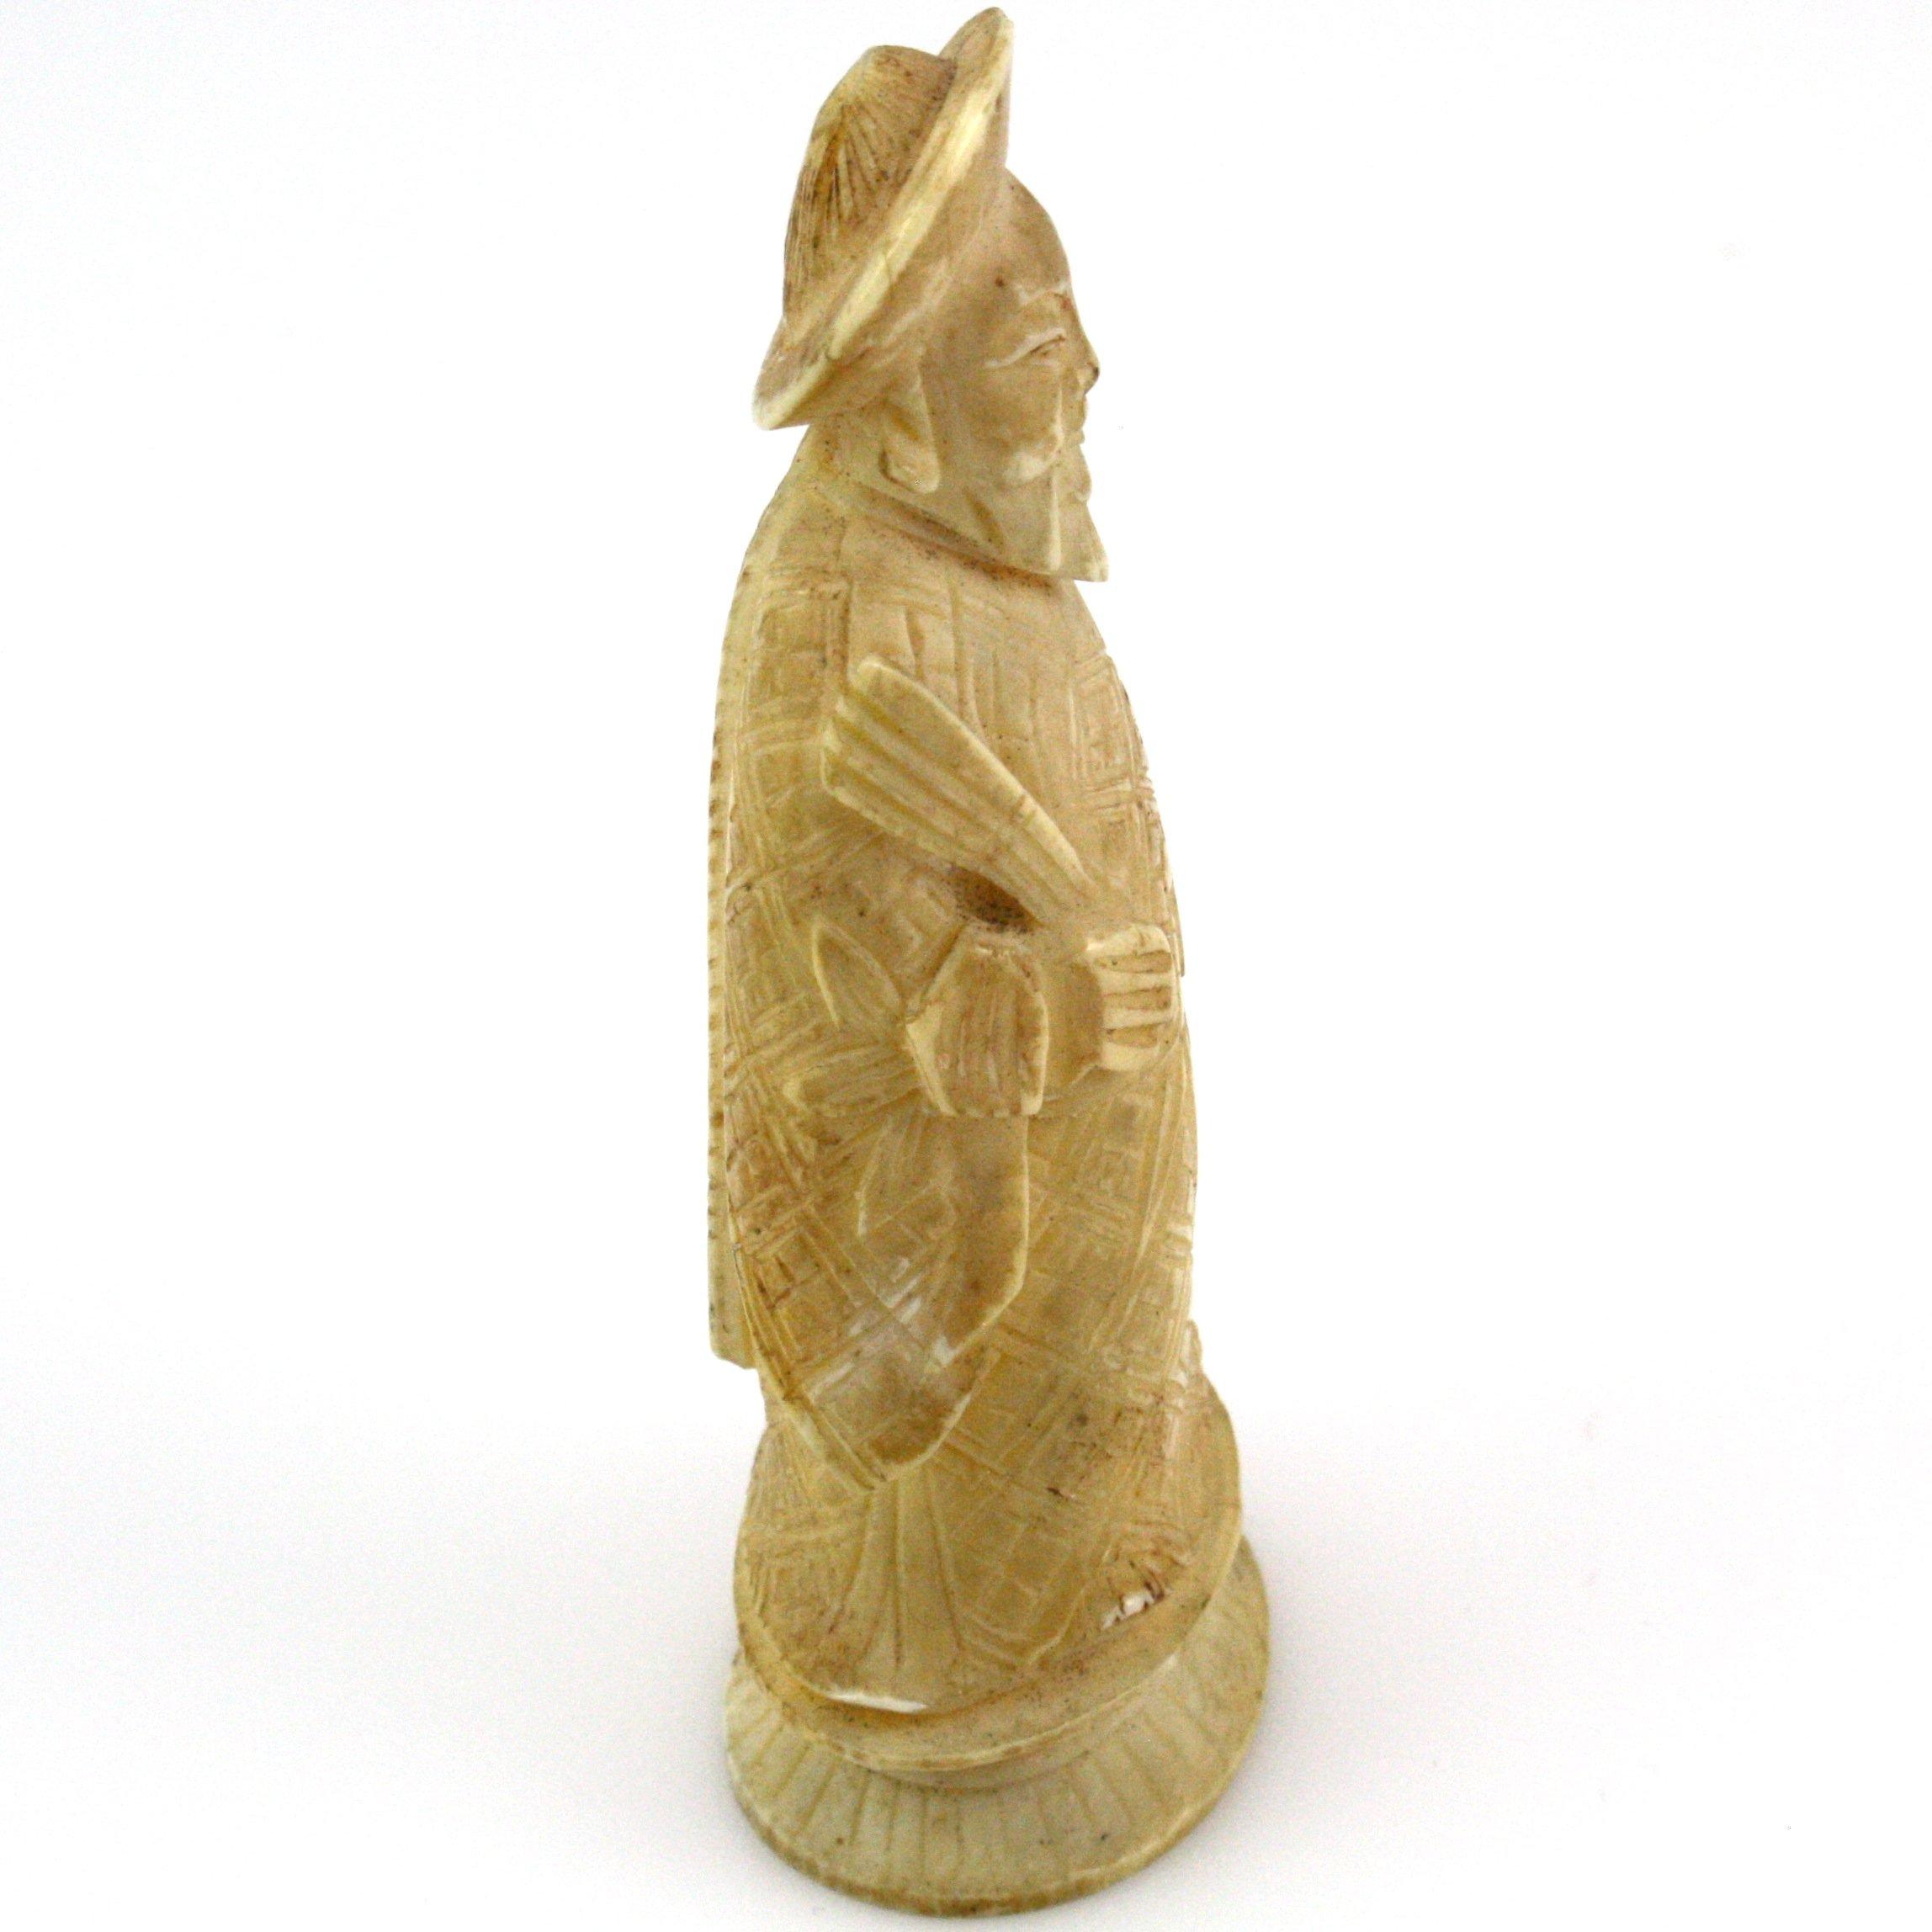 Vintage genuine hand-carved ivory Chinese man figurine